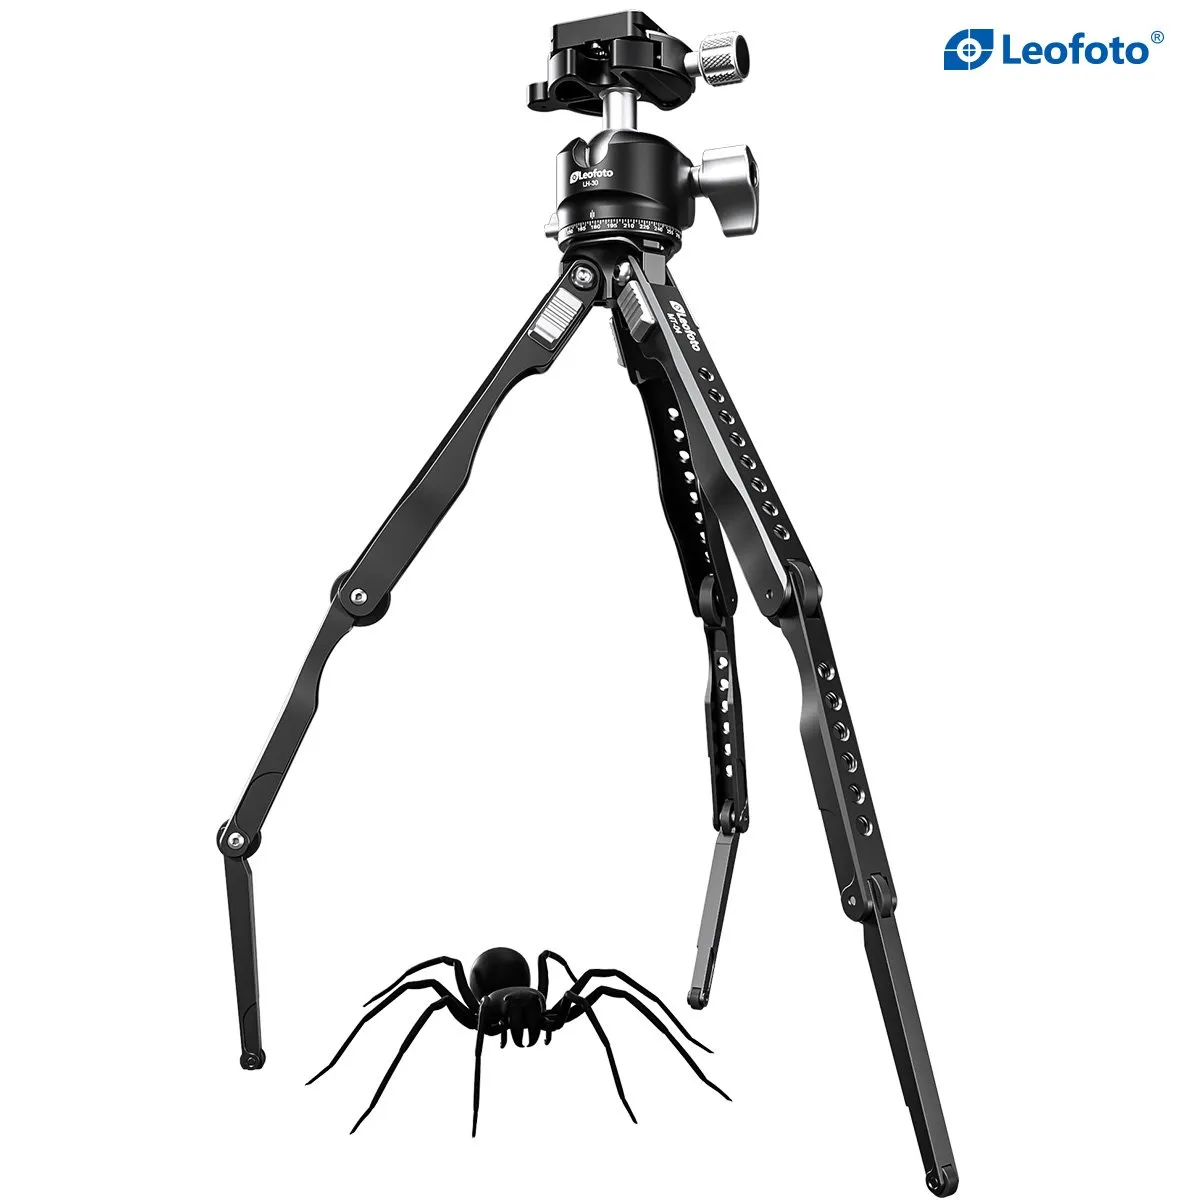 Leofoto ra mắt tripod Leofoto Spider với thiết kế chân khớp gập